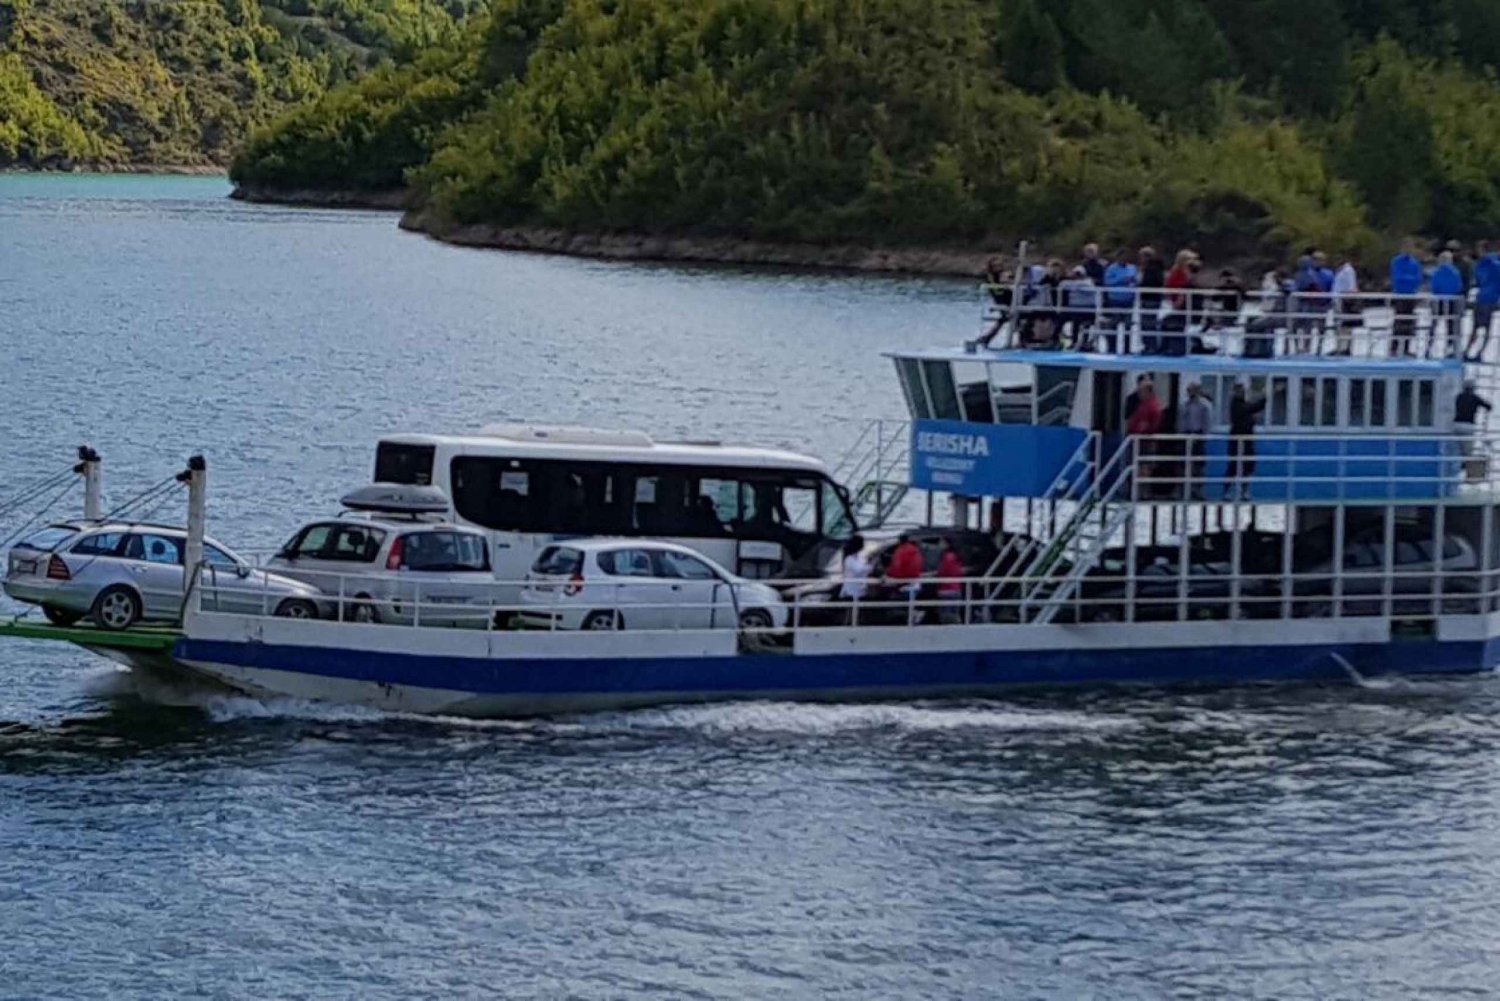 Autobús de Tirana a Valbona con transbordador en el lago Koman